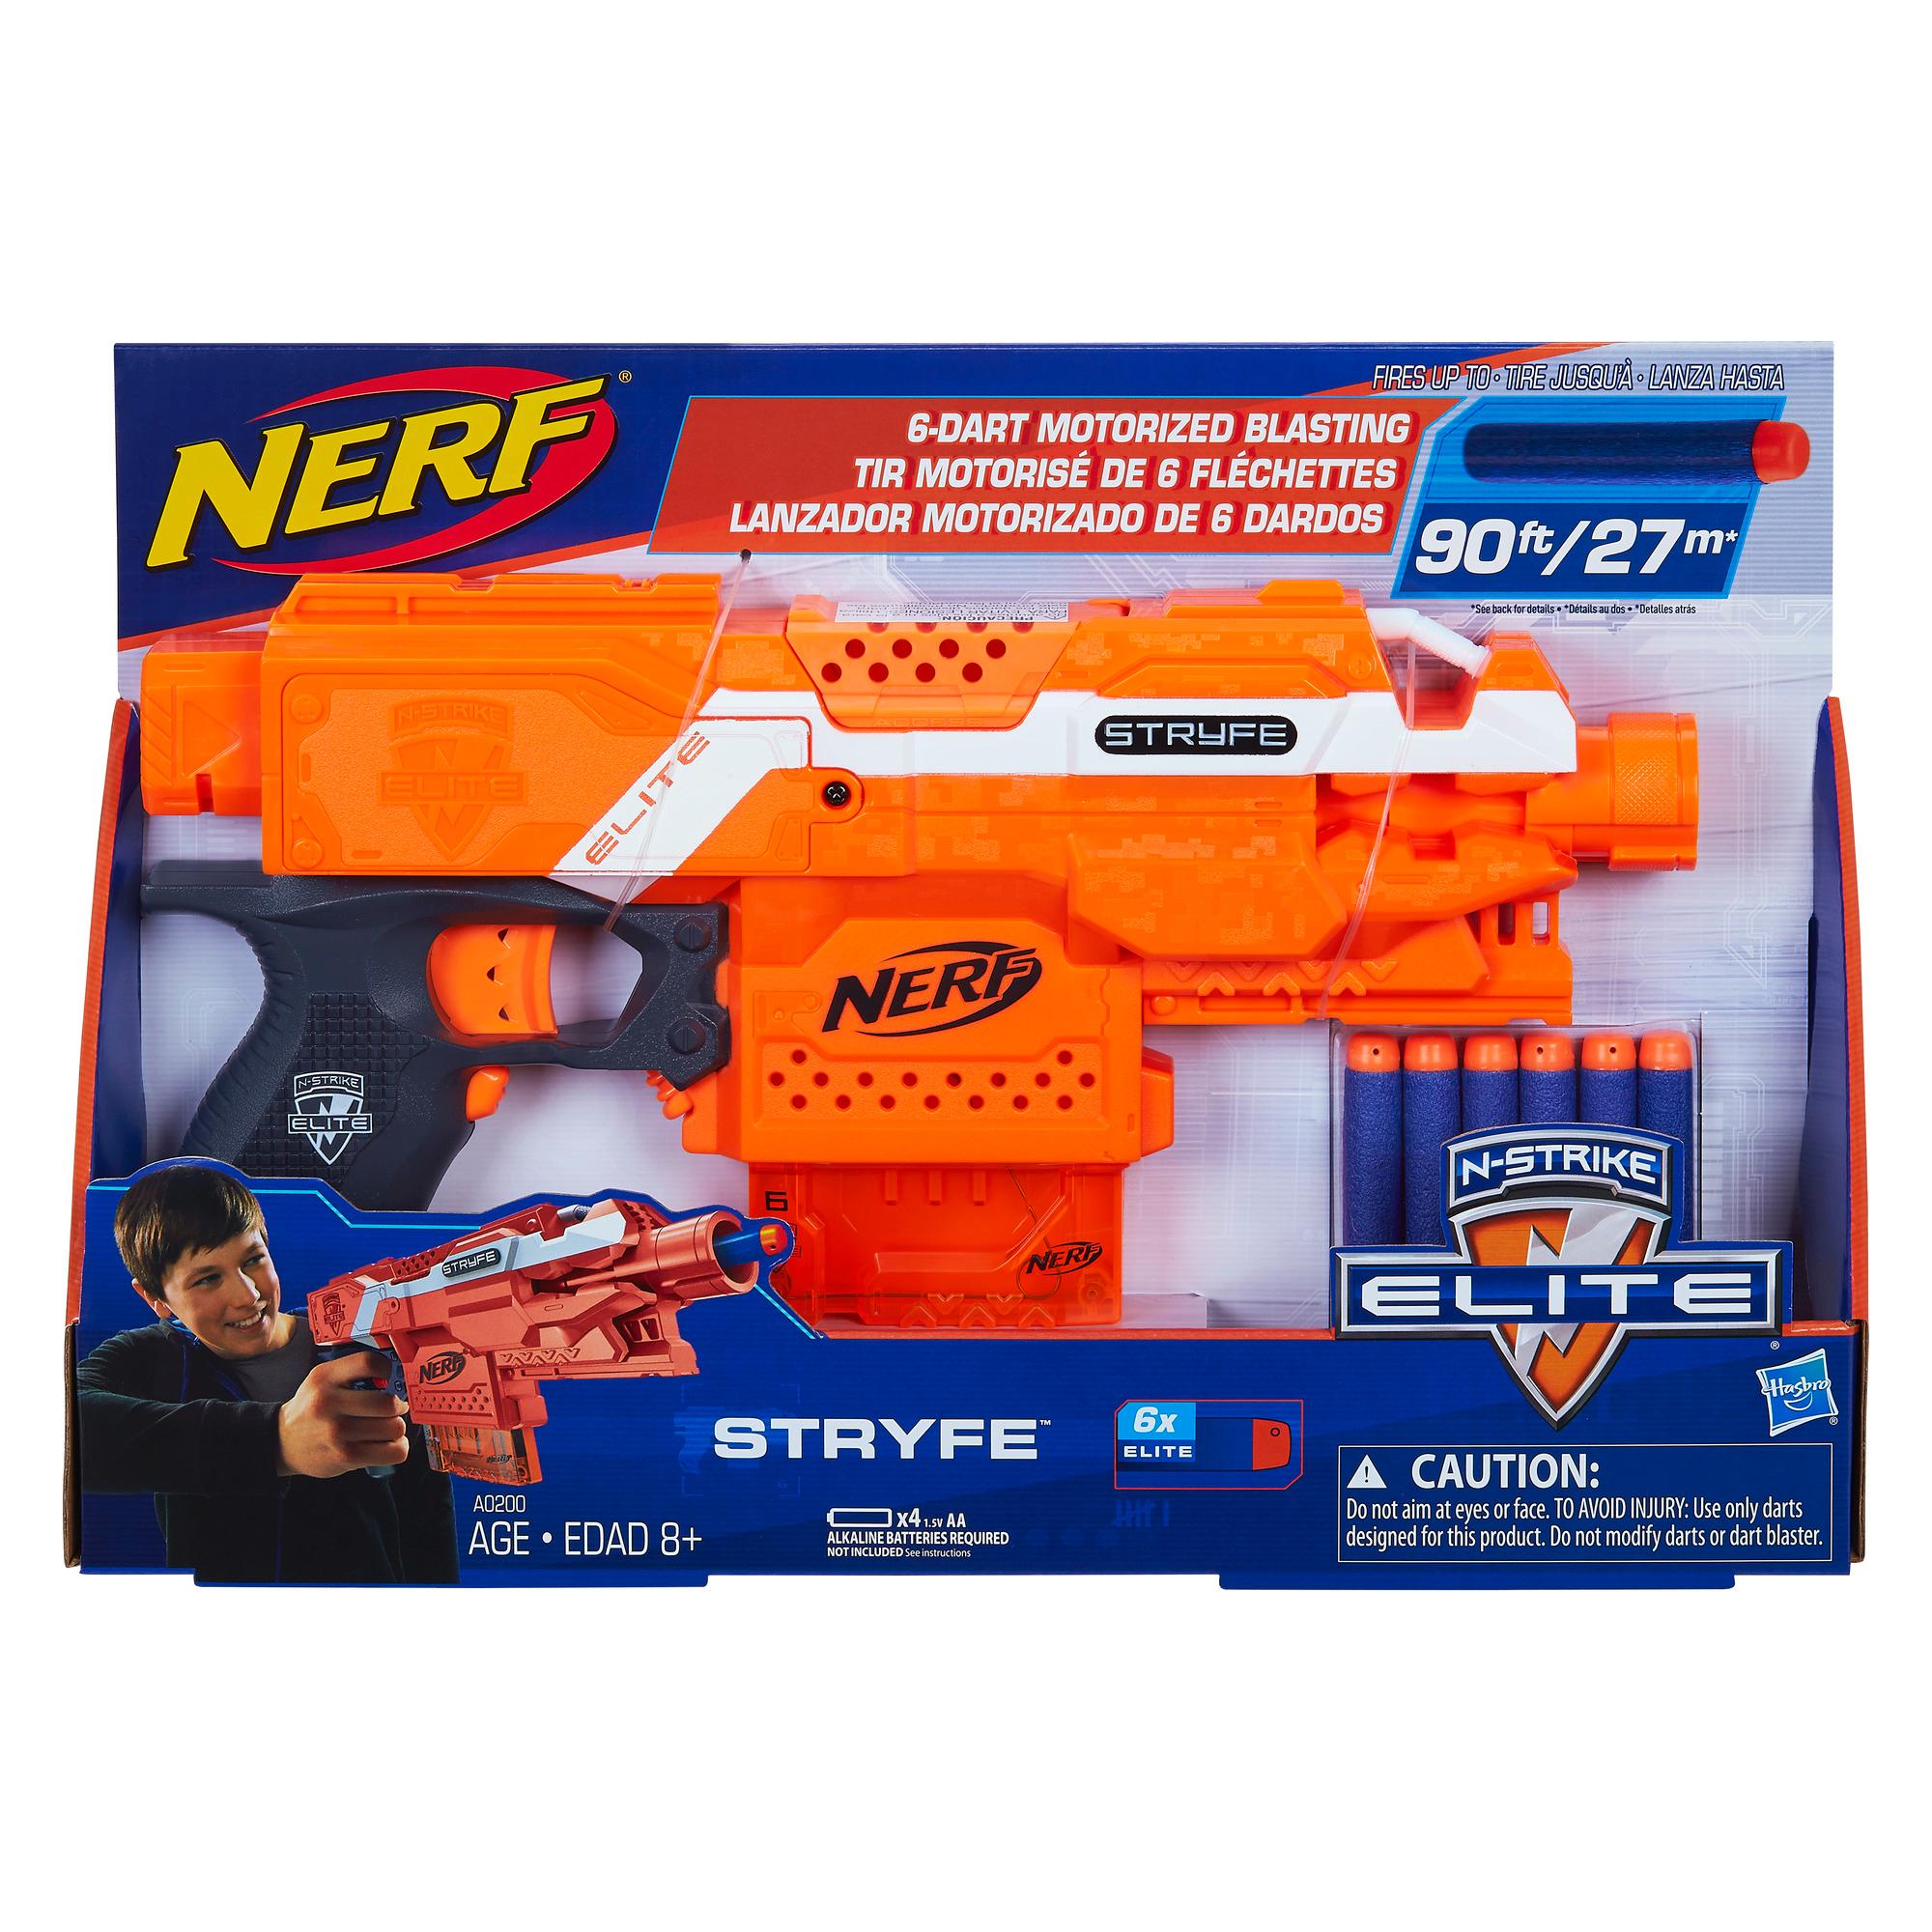 Stryfe Nerf A0200E240 Hasbro Import Royaume-Uni N-Strike Elite 